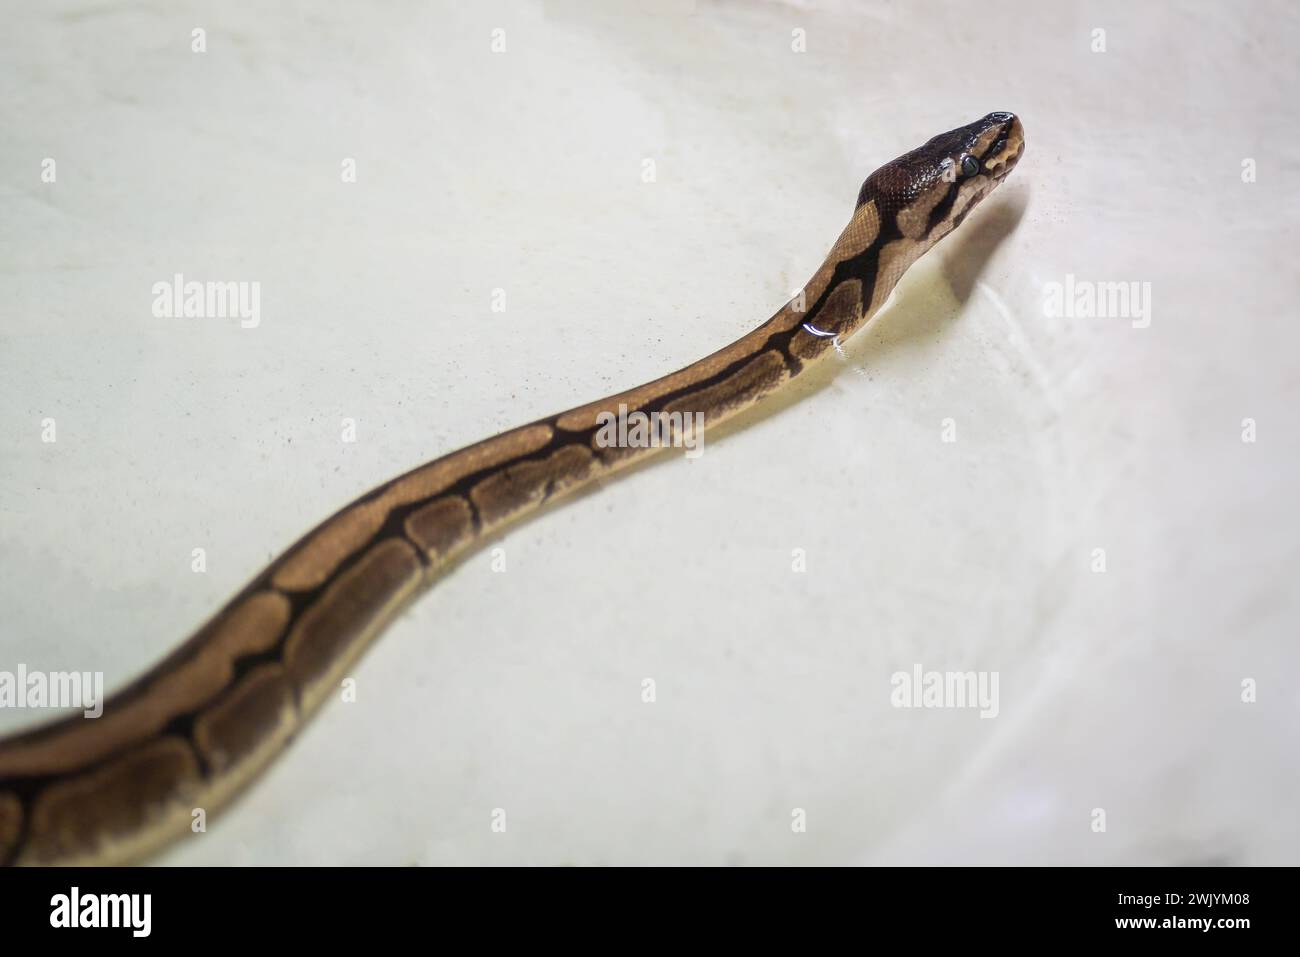 Ball Python snake (Python regius) Stock Photo